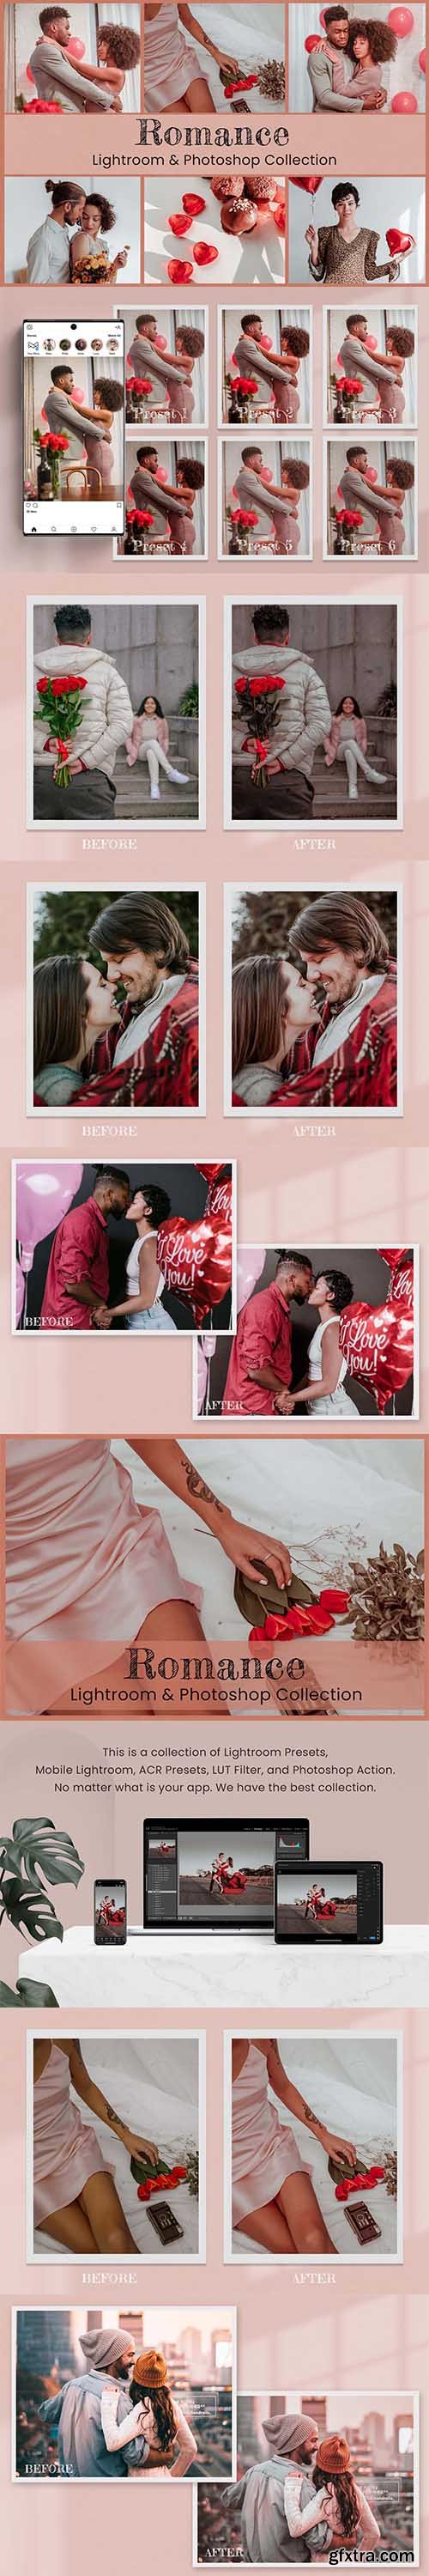 CreativeMarket - Romance Lightroom Photoshop LUTs 6635279